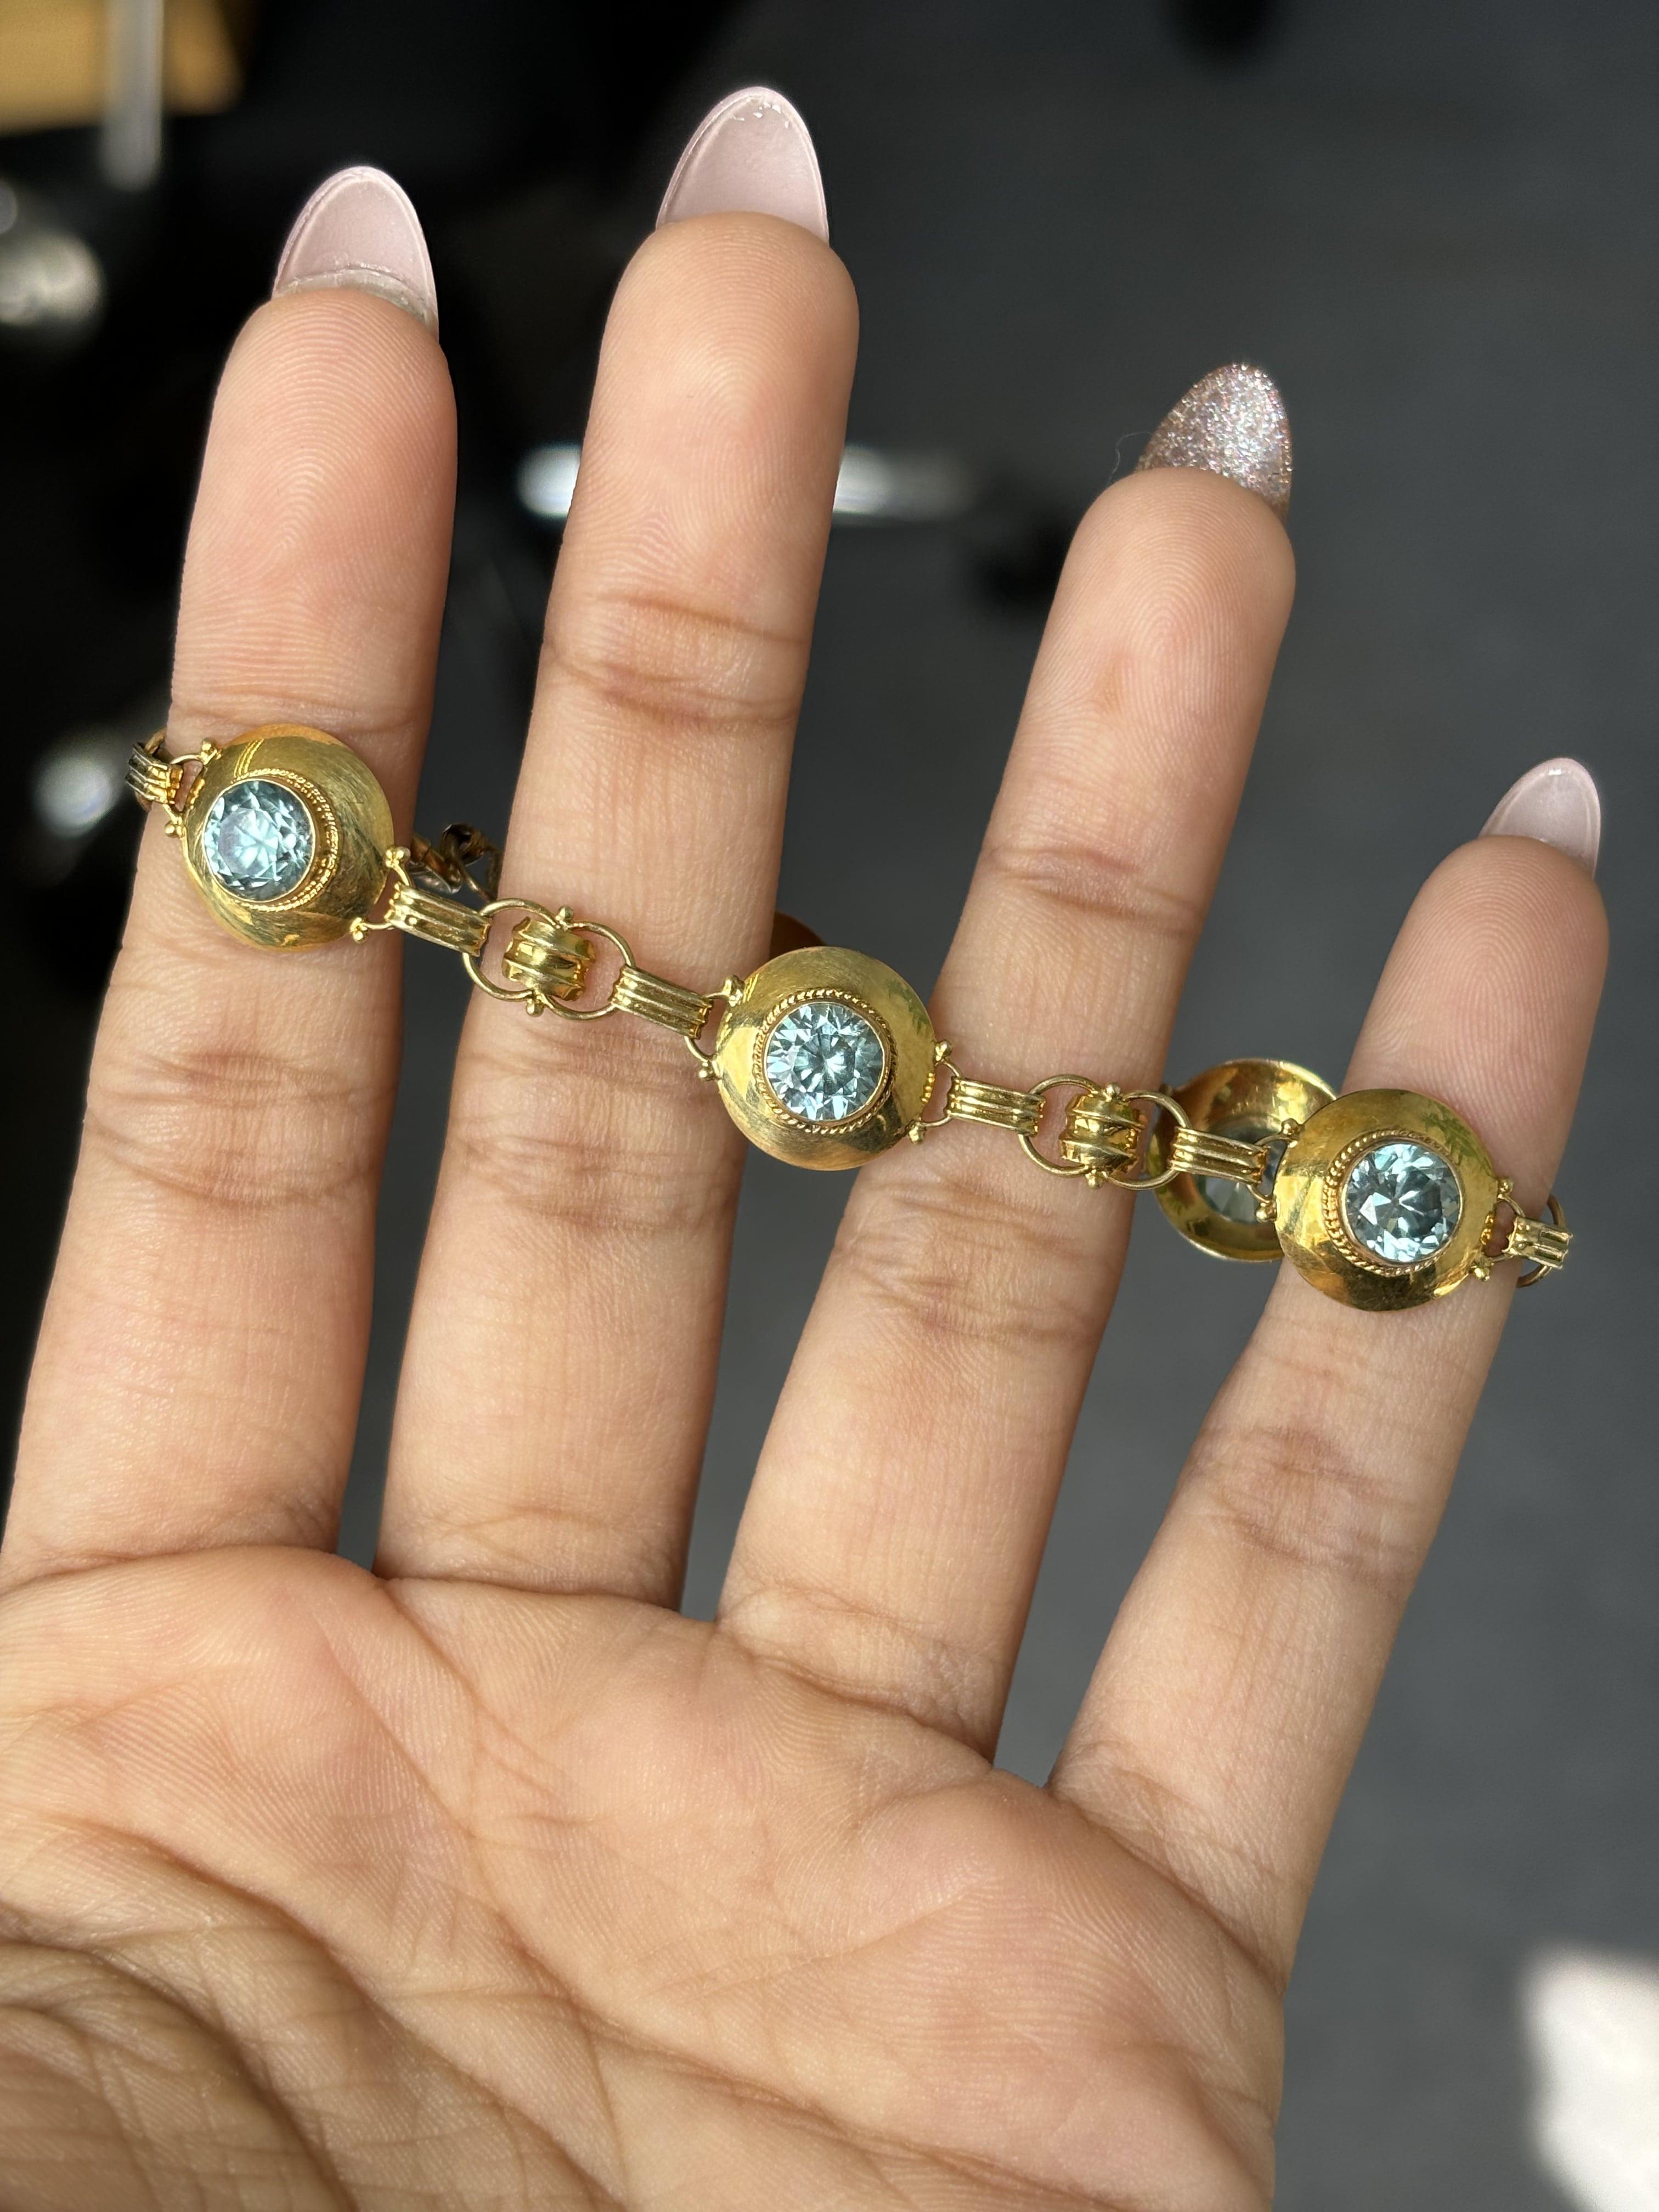 Gilded Age Antique circa 1900s Light Blue Zircon Bracelet in 14K Yellow Gold